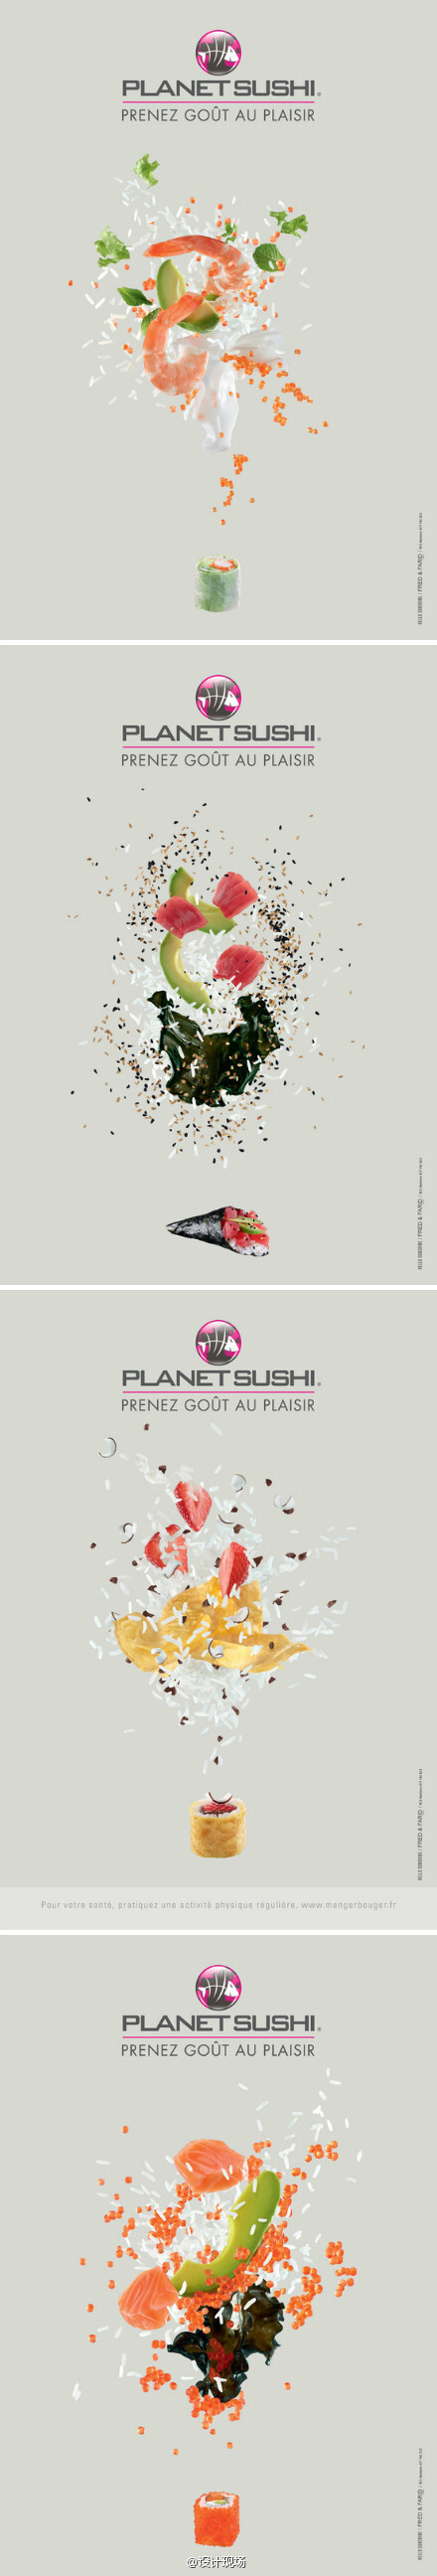 Planet Sushi 平面广告设计